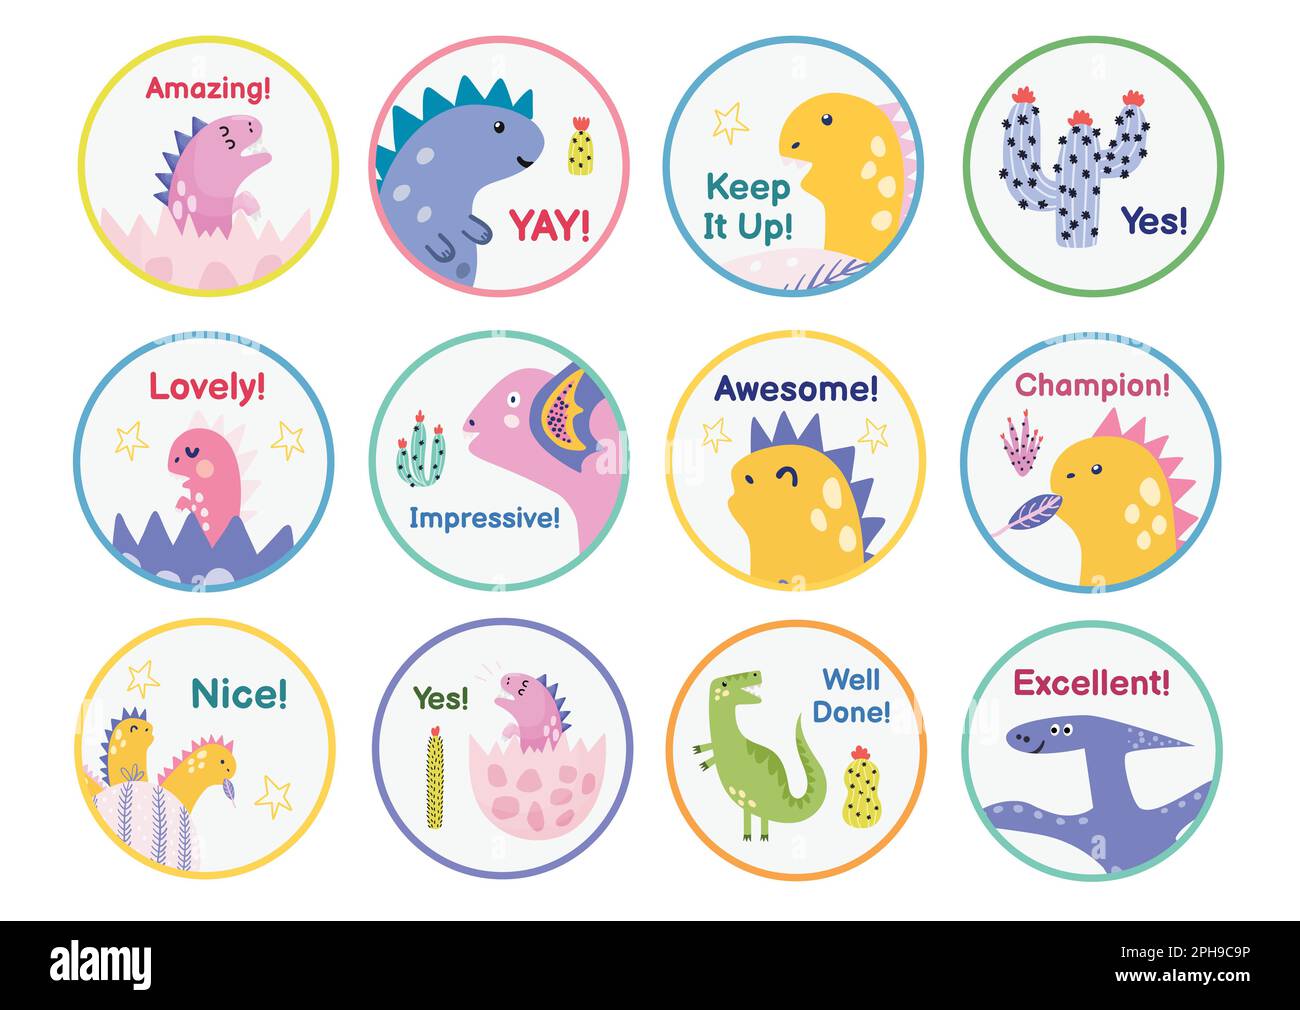 https://c8.alamy.com/comp/2PH9C9P/reward-stickers-collection-with-cute-dinosaurs-teachers-award-badges-with-funny-dinos-2PH9C9P.jpg